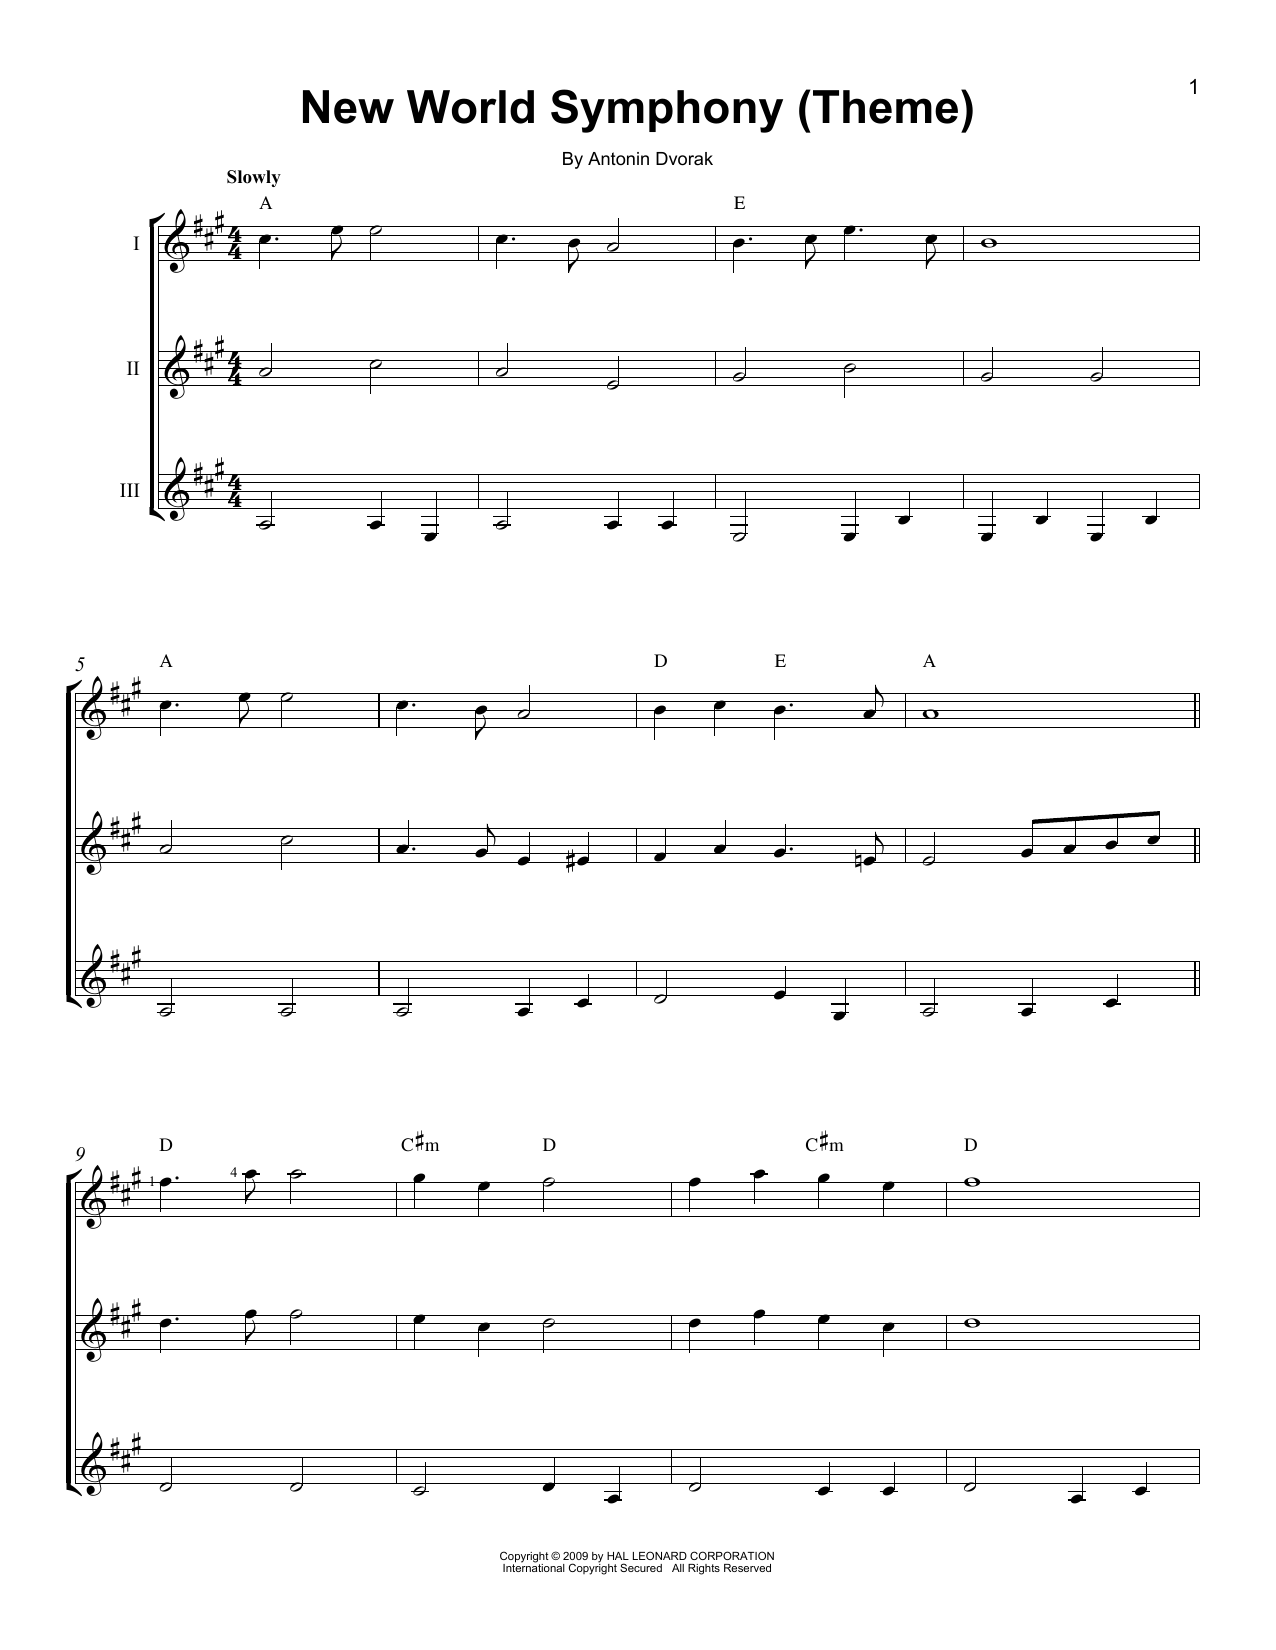 Antonin Dvorak New World Symphony (Theme) sheet music notes and chords. Download Printable PDF.